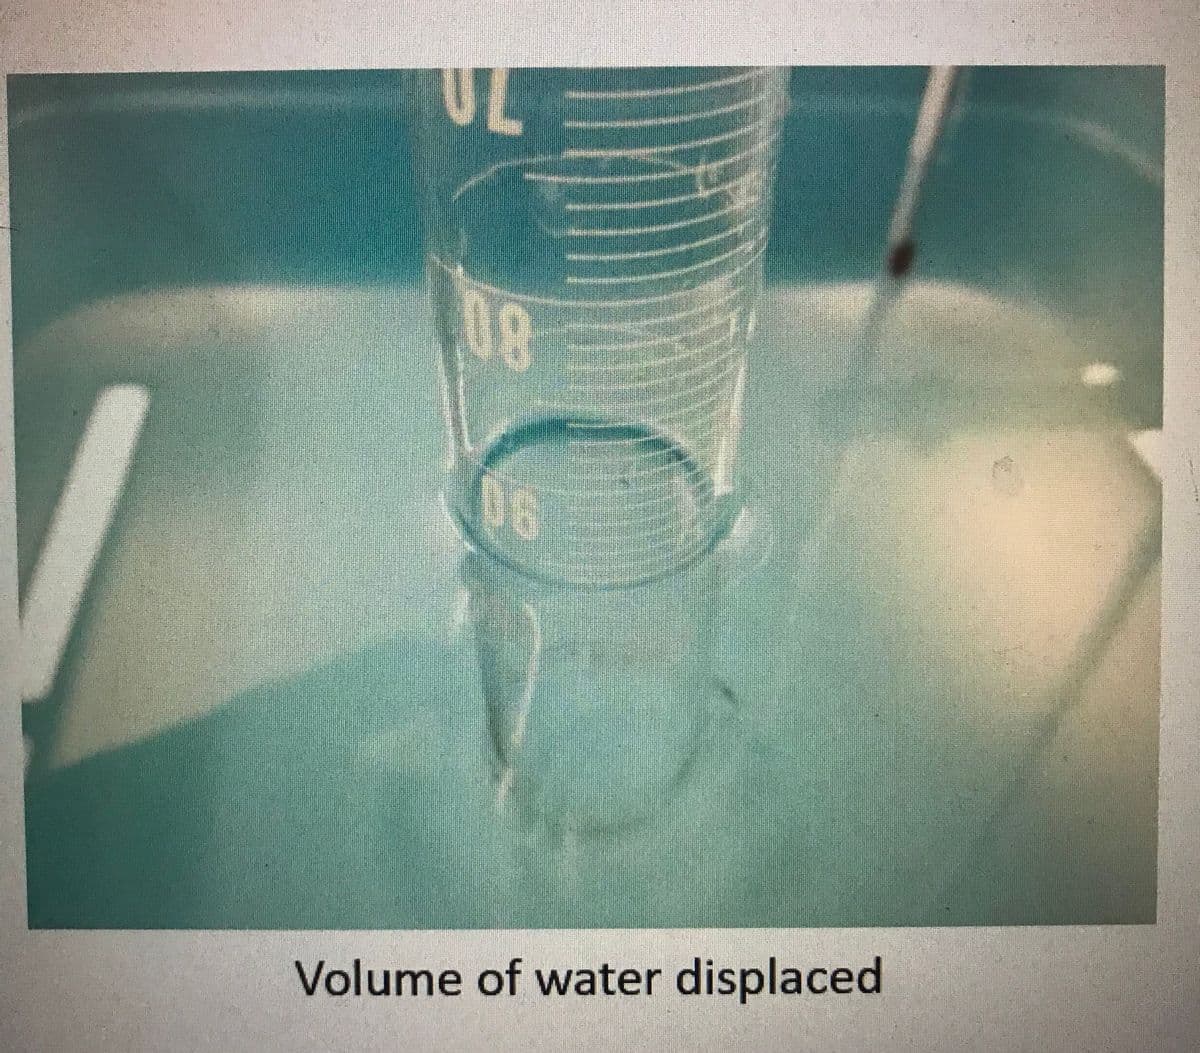 Volume of water displaced
